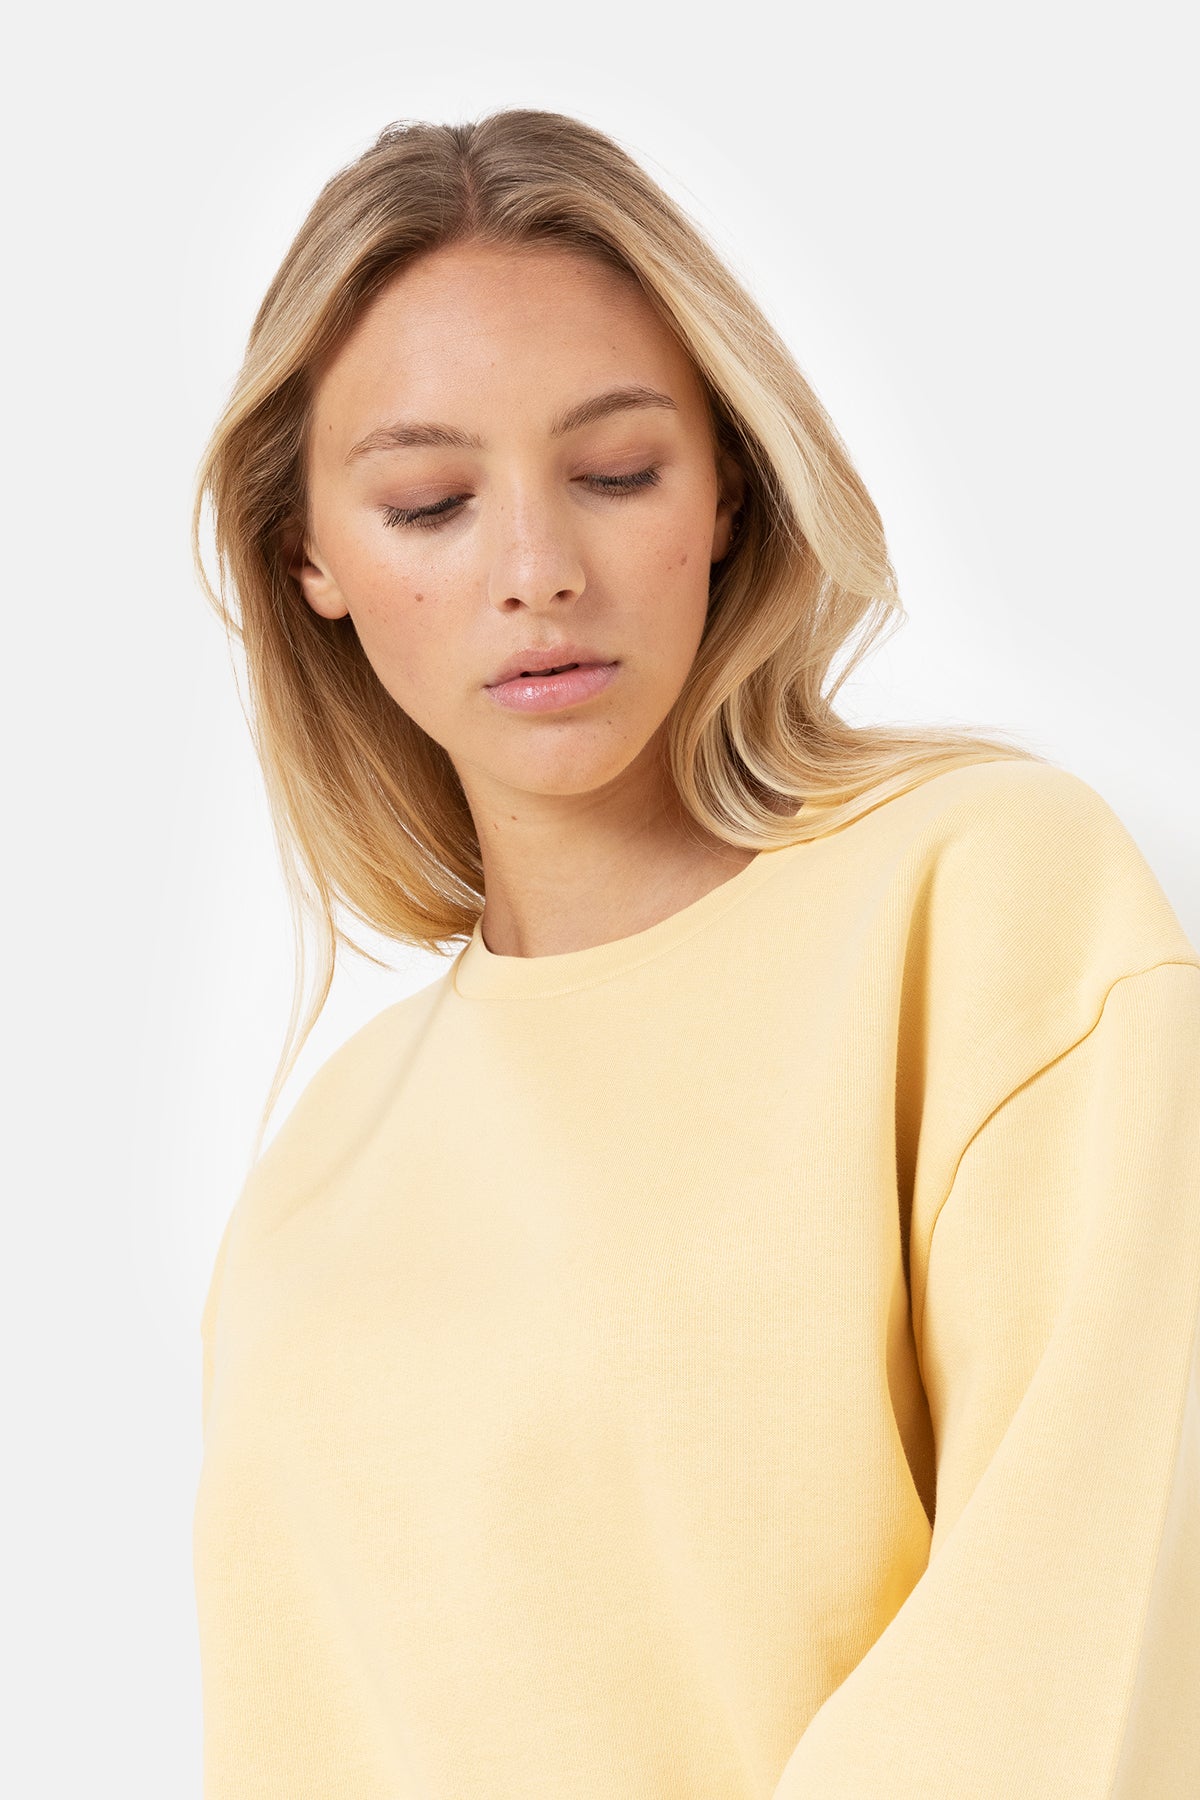 Clemence Sweatshirt | Sun